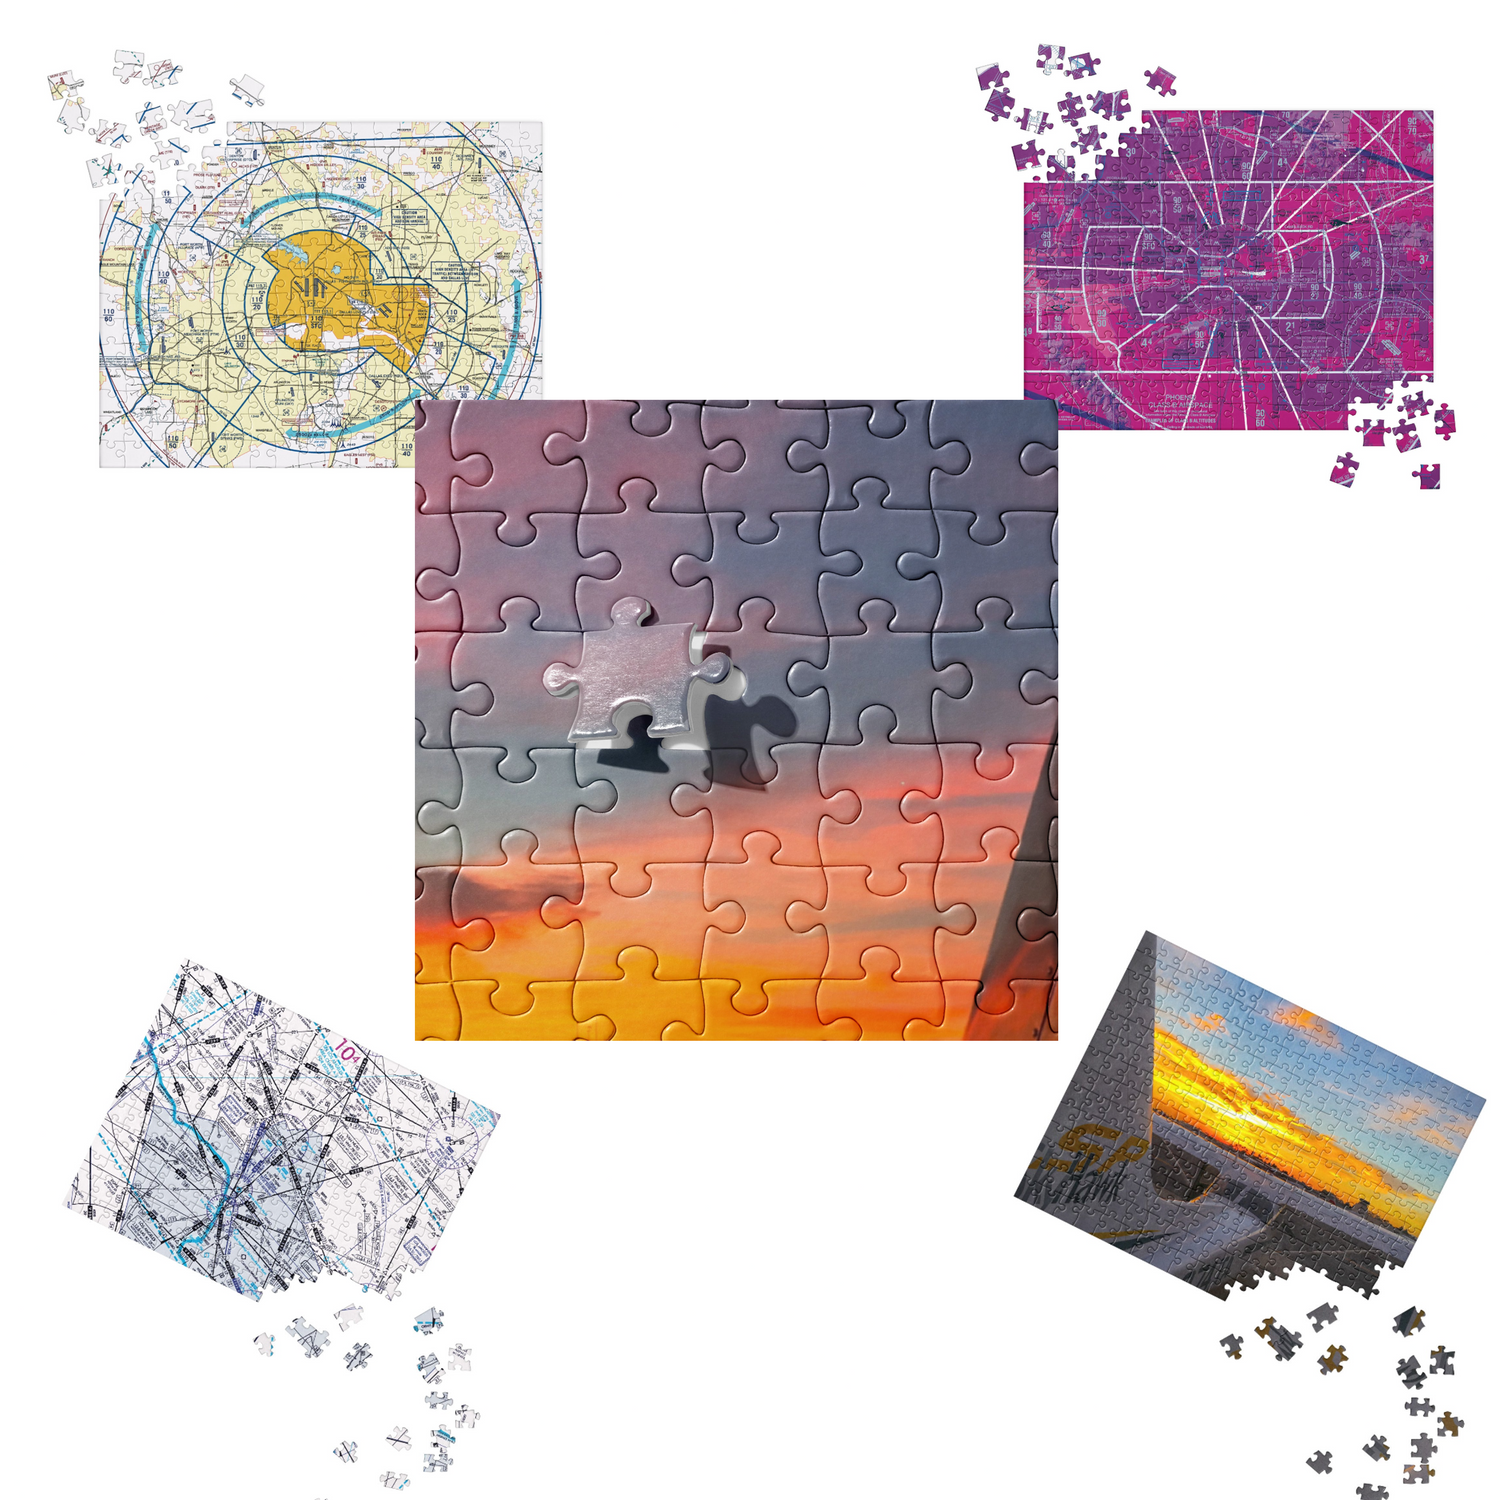 Aviation themed puzzles